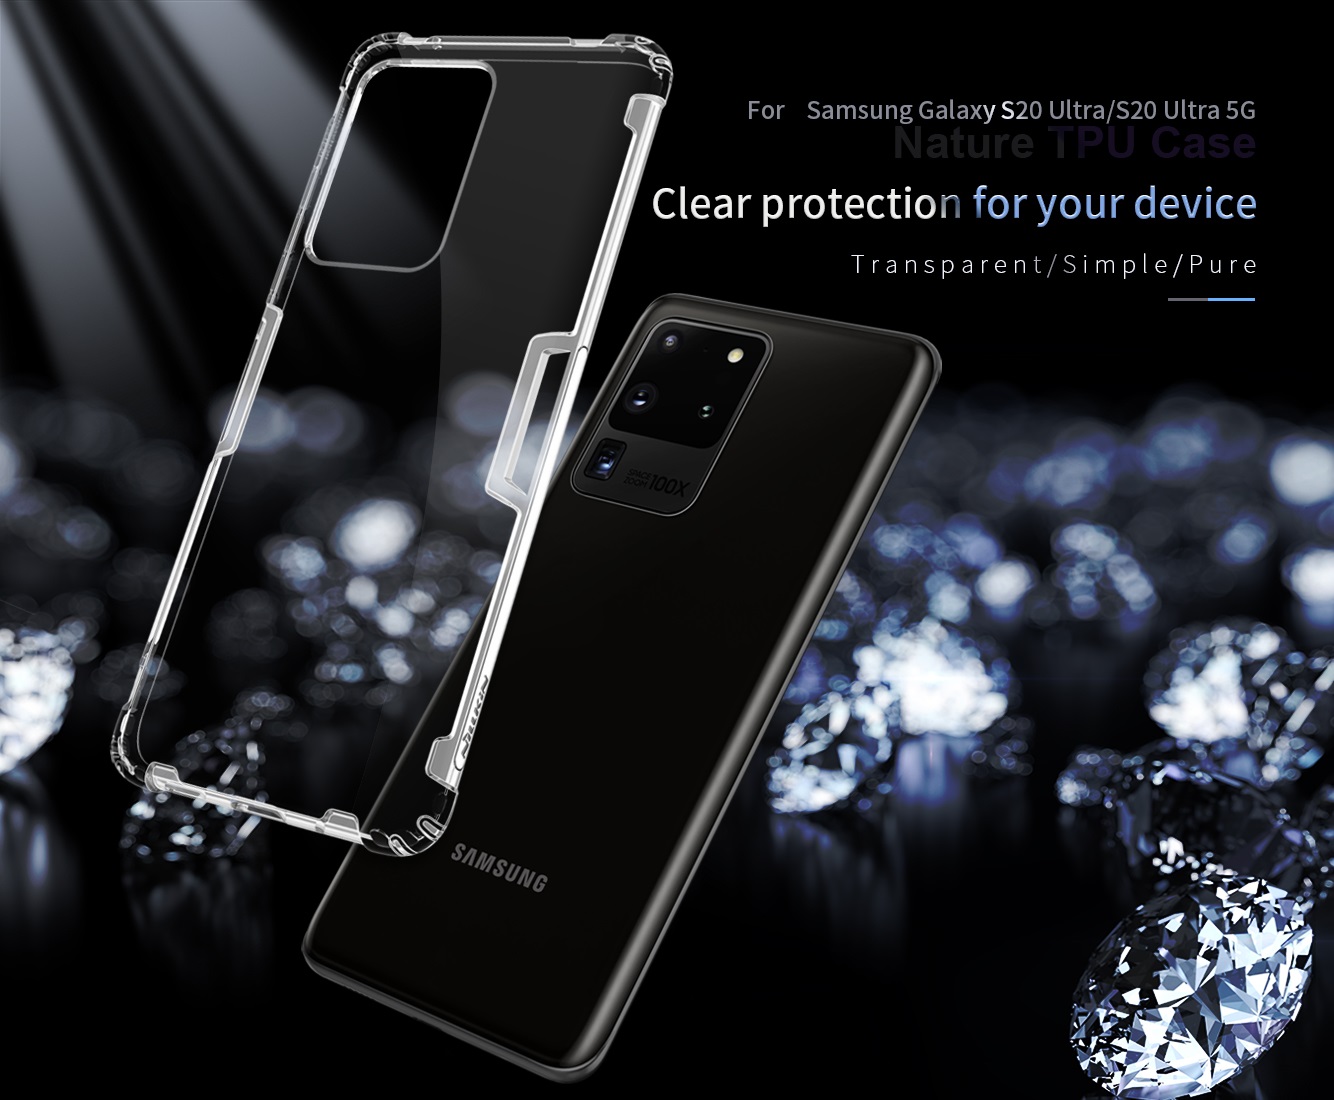 Nature_TPU_Case_for_Samsung_Galaxy_S20_Ultra-01.jpg